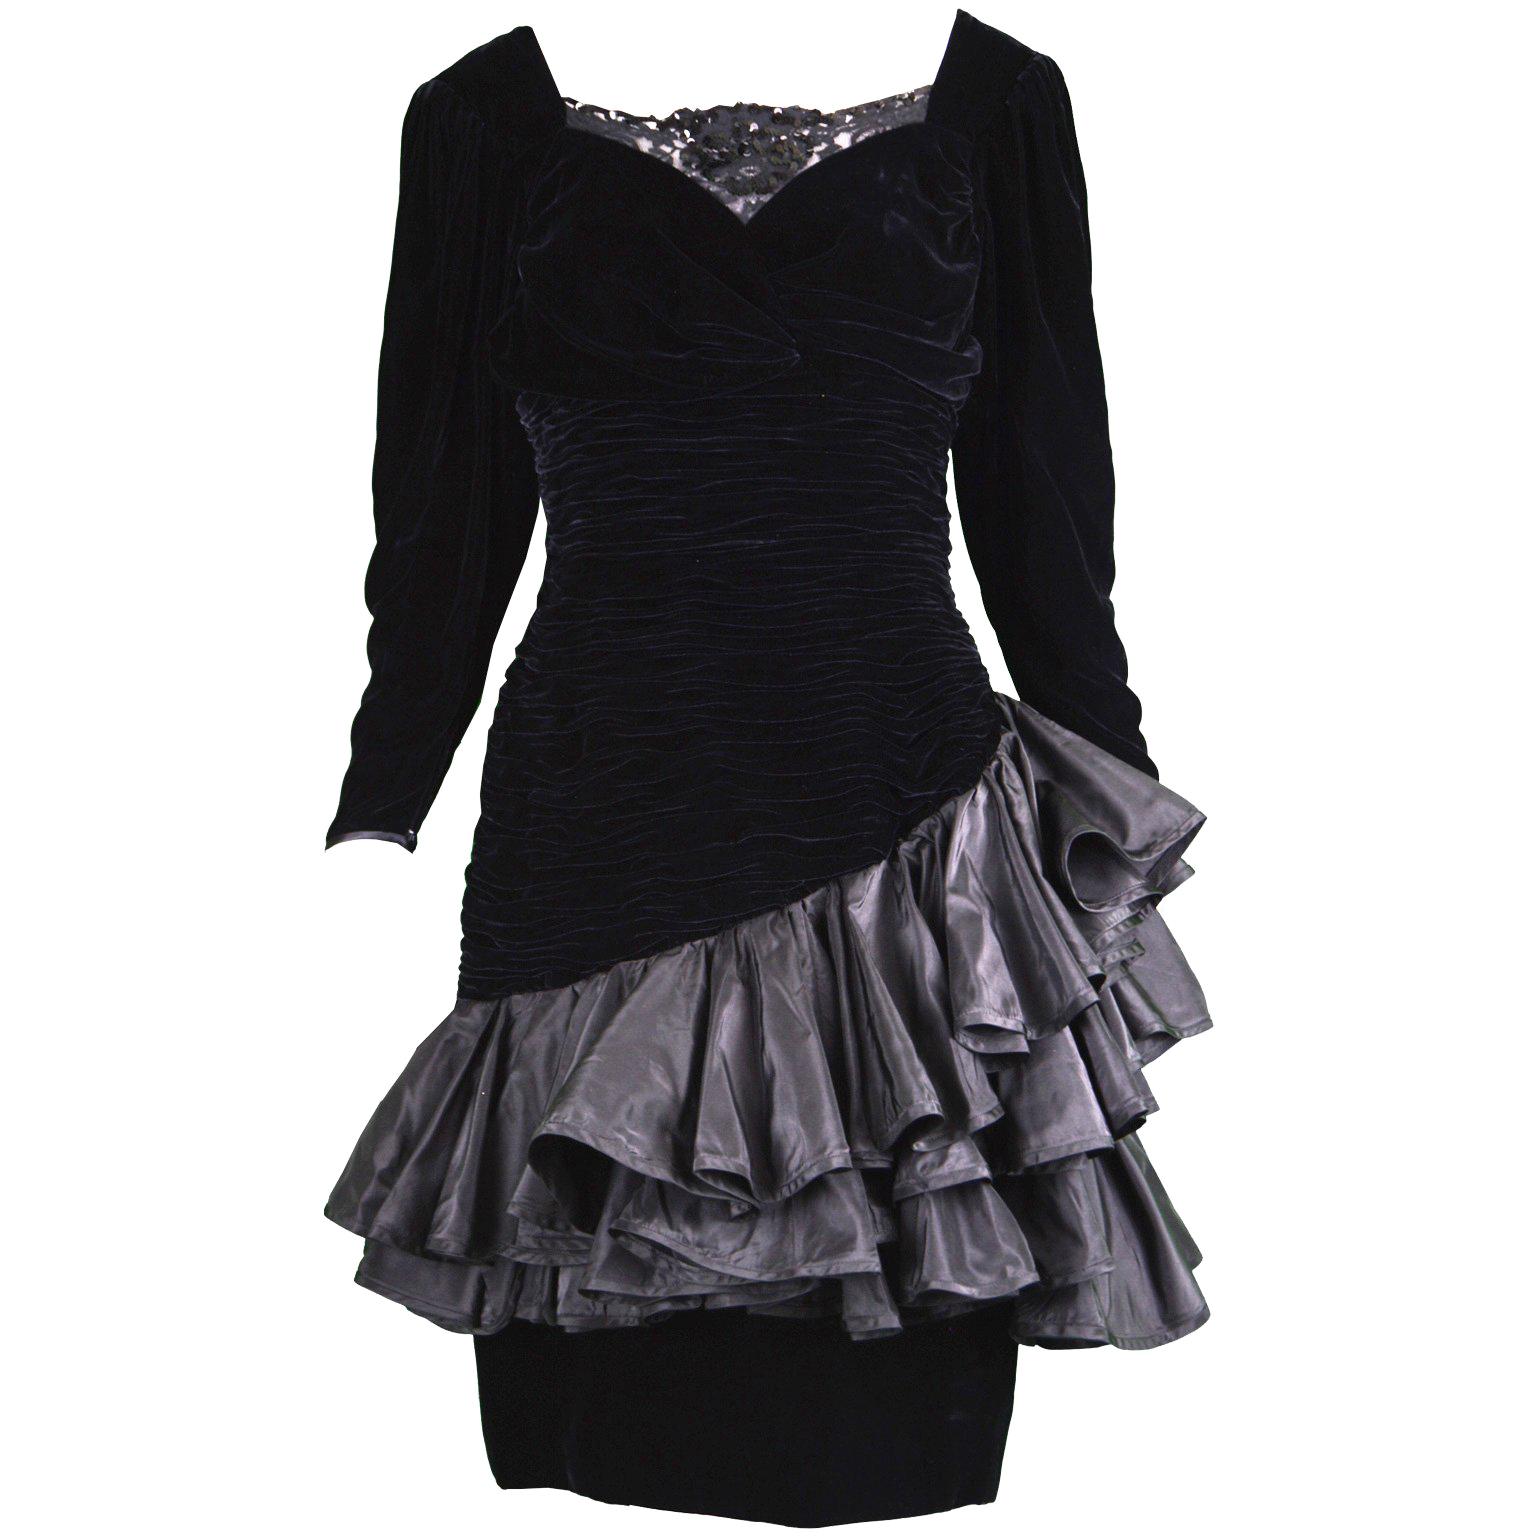 Vintage 1980s Black Velvet and Lace Dress 80s Silk Burnout Velvet Taffeta Party Dress Medium Drop-waist Frock